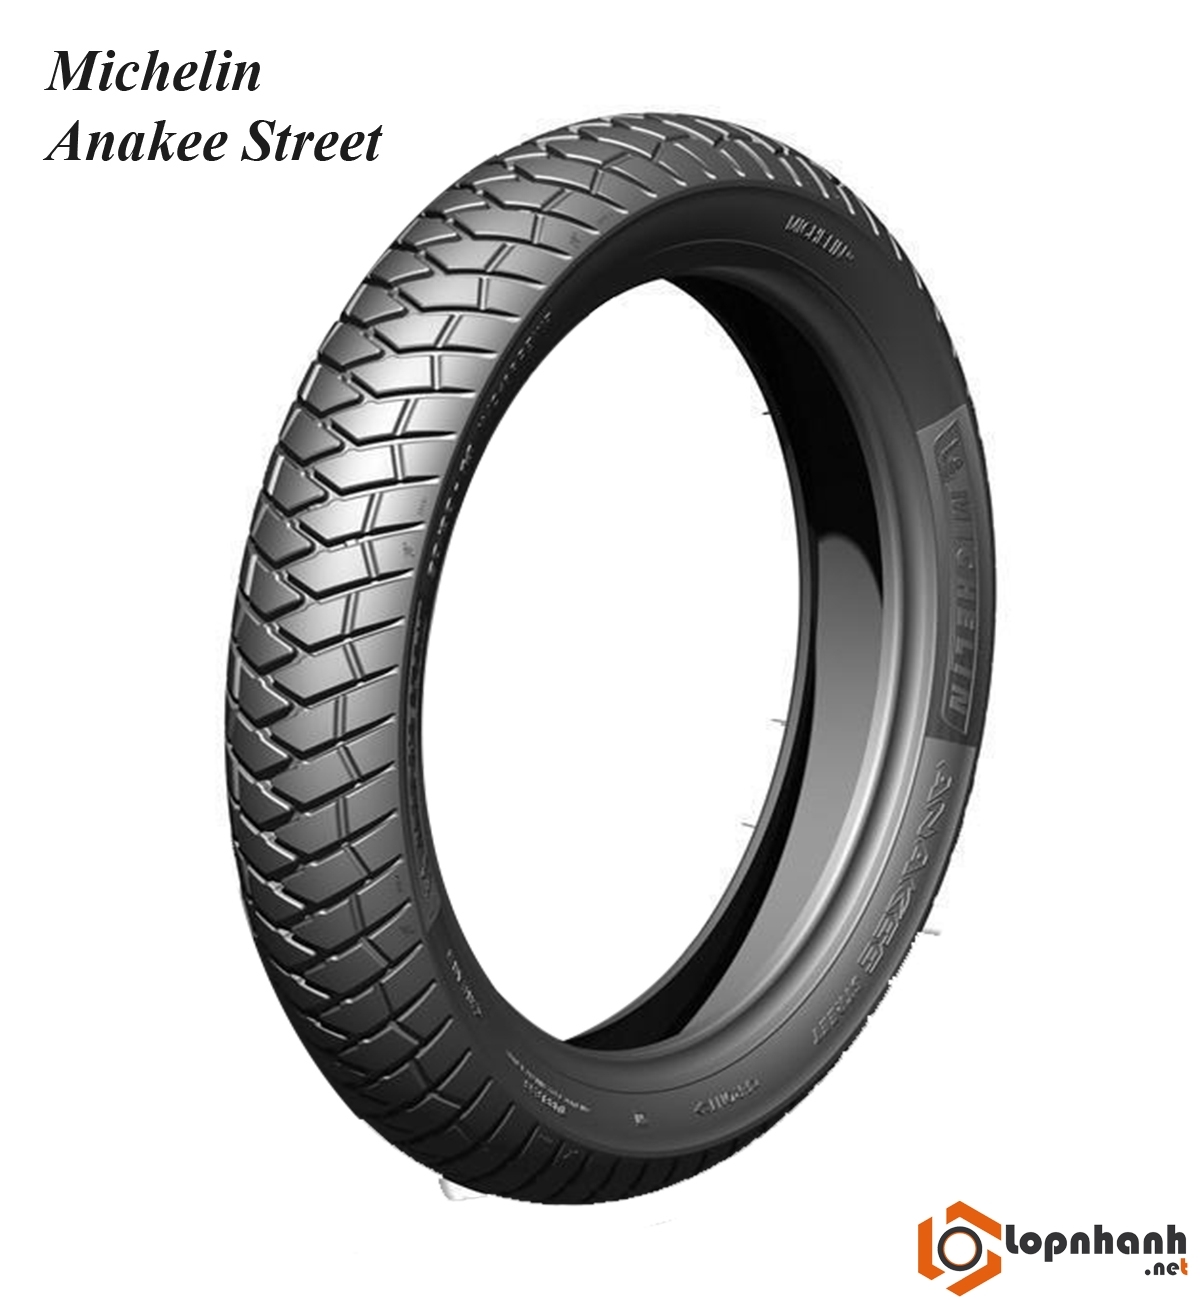 Lốp/vỏ xe máy Michelin 110/80-14 M/C 59P Anakee Street cho PCX, ADV, NVX, Airblade, Vision